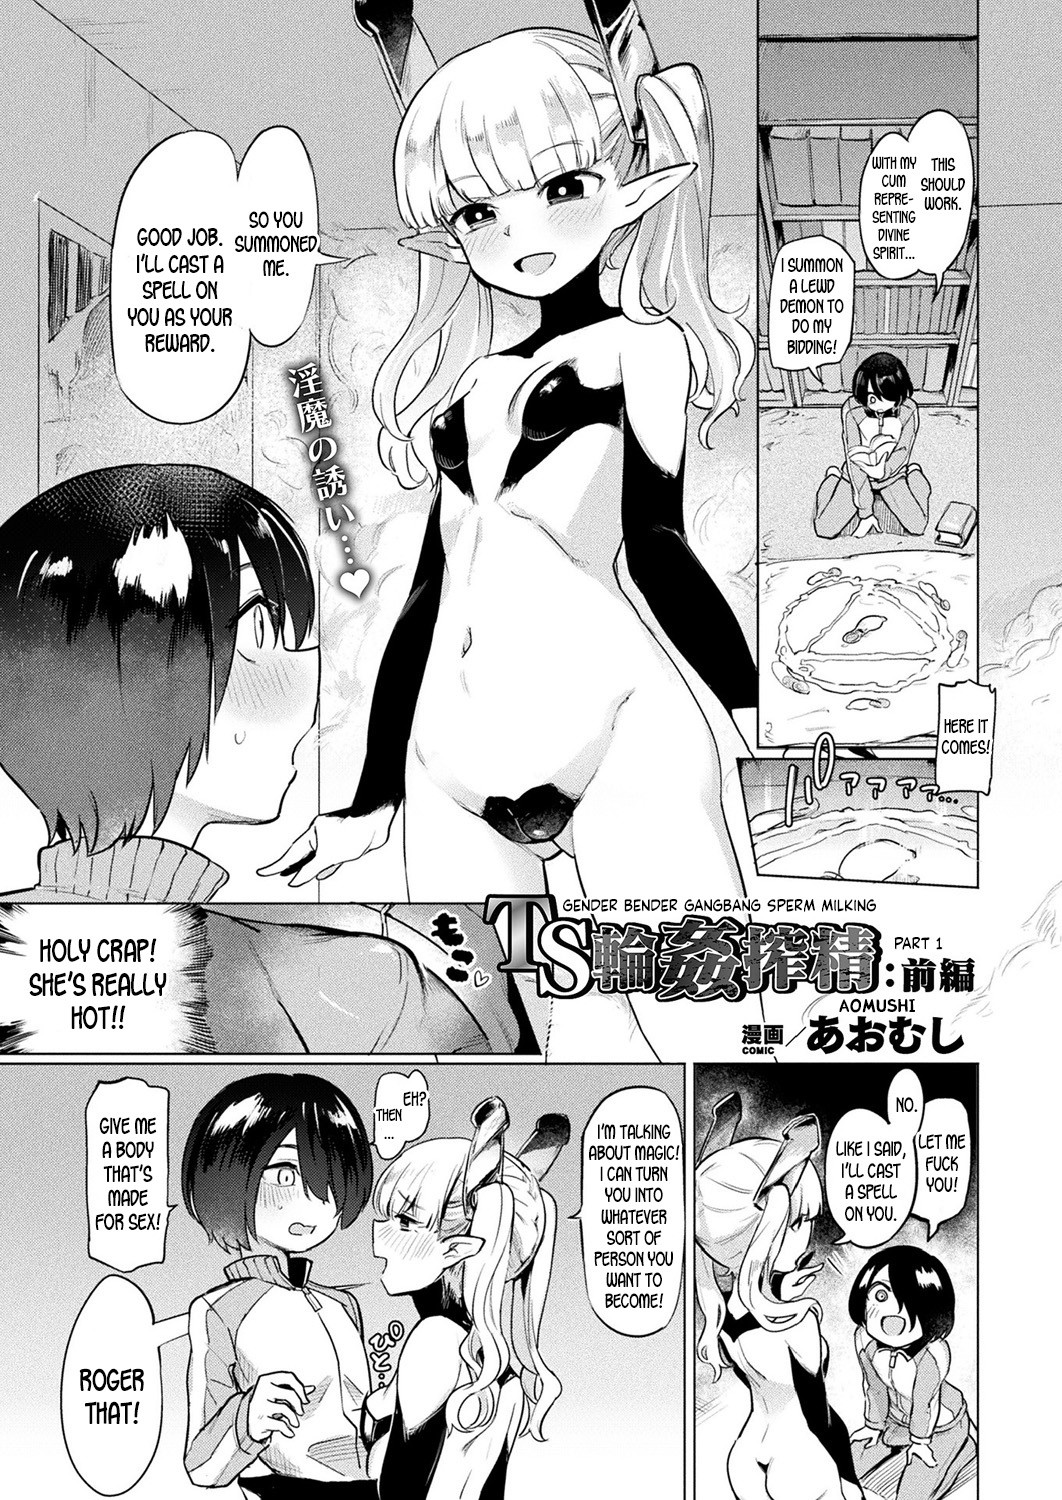 Hentai Manga Comic-Gender Bender Gangbang Sperm Milking part1-Read-1